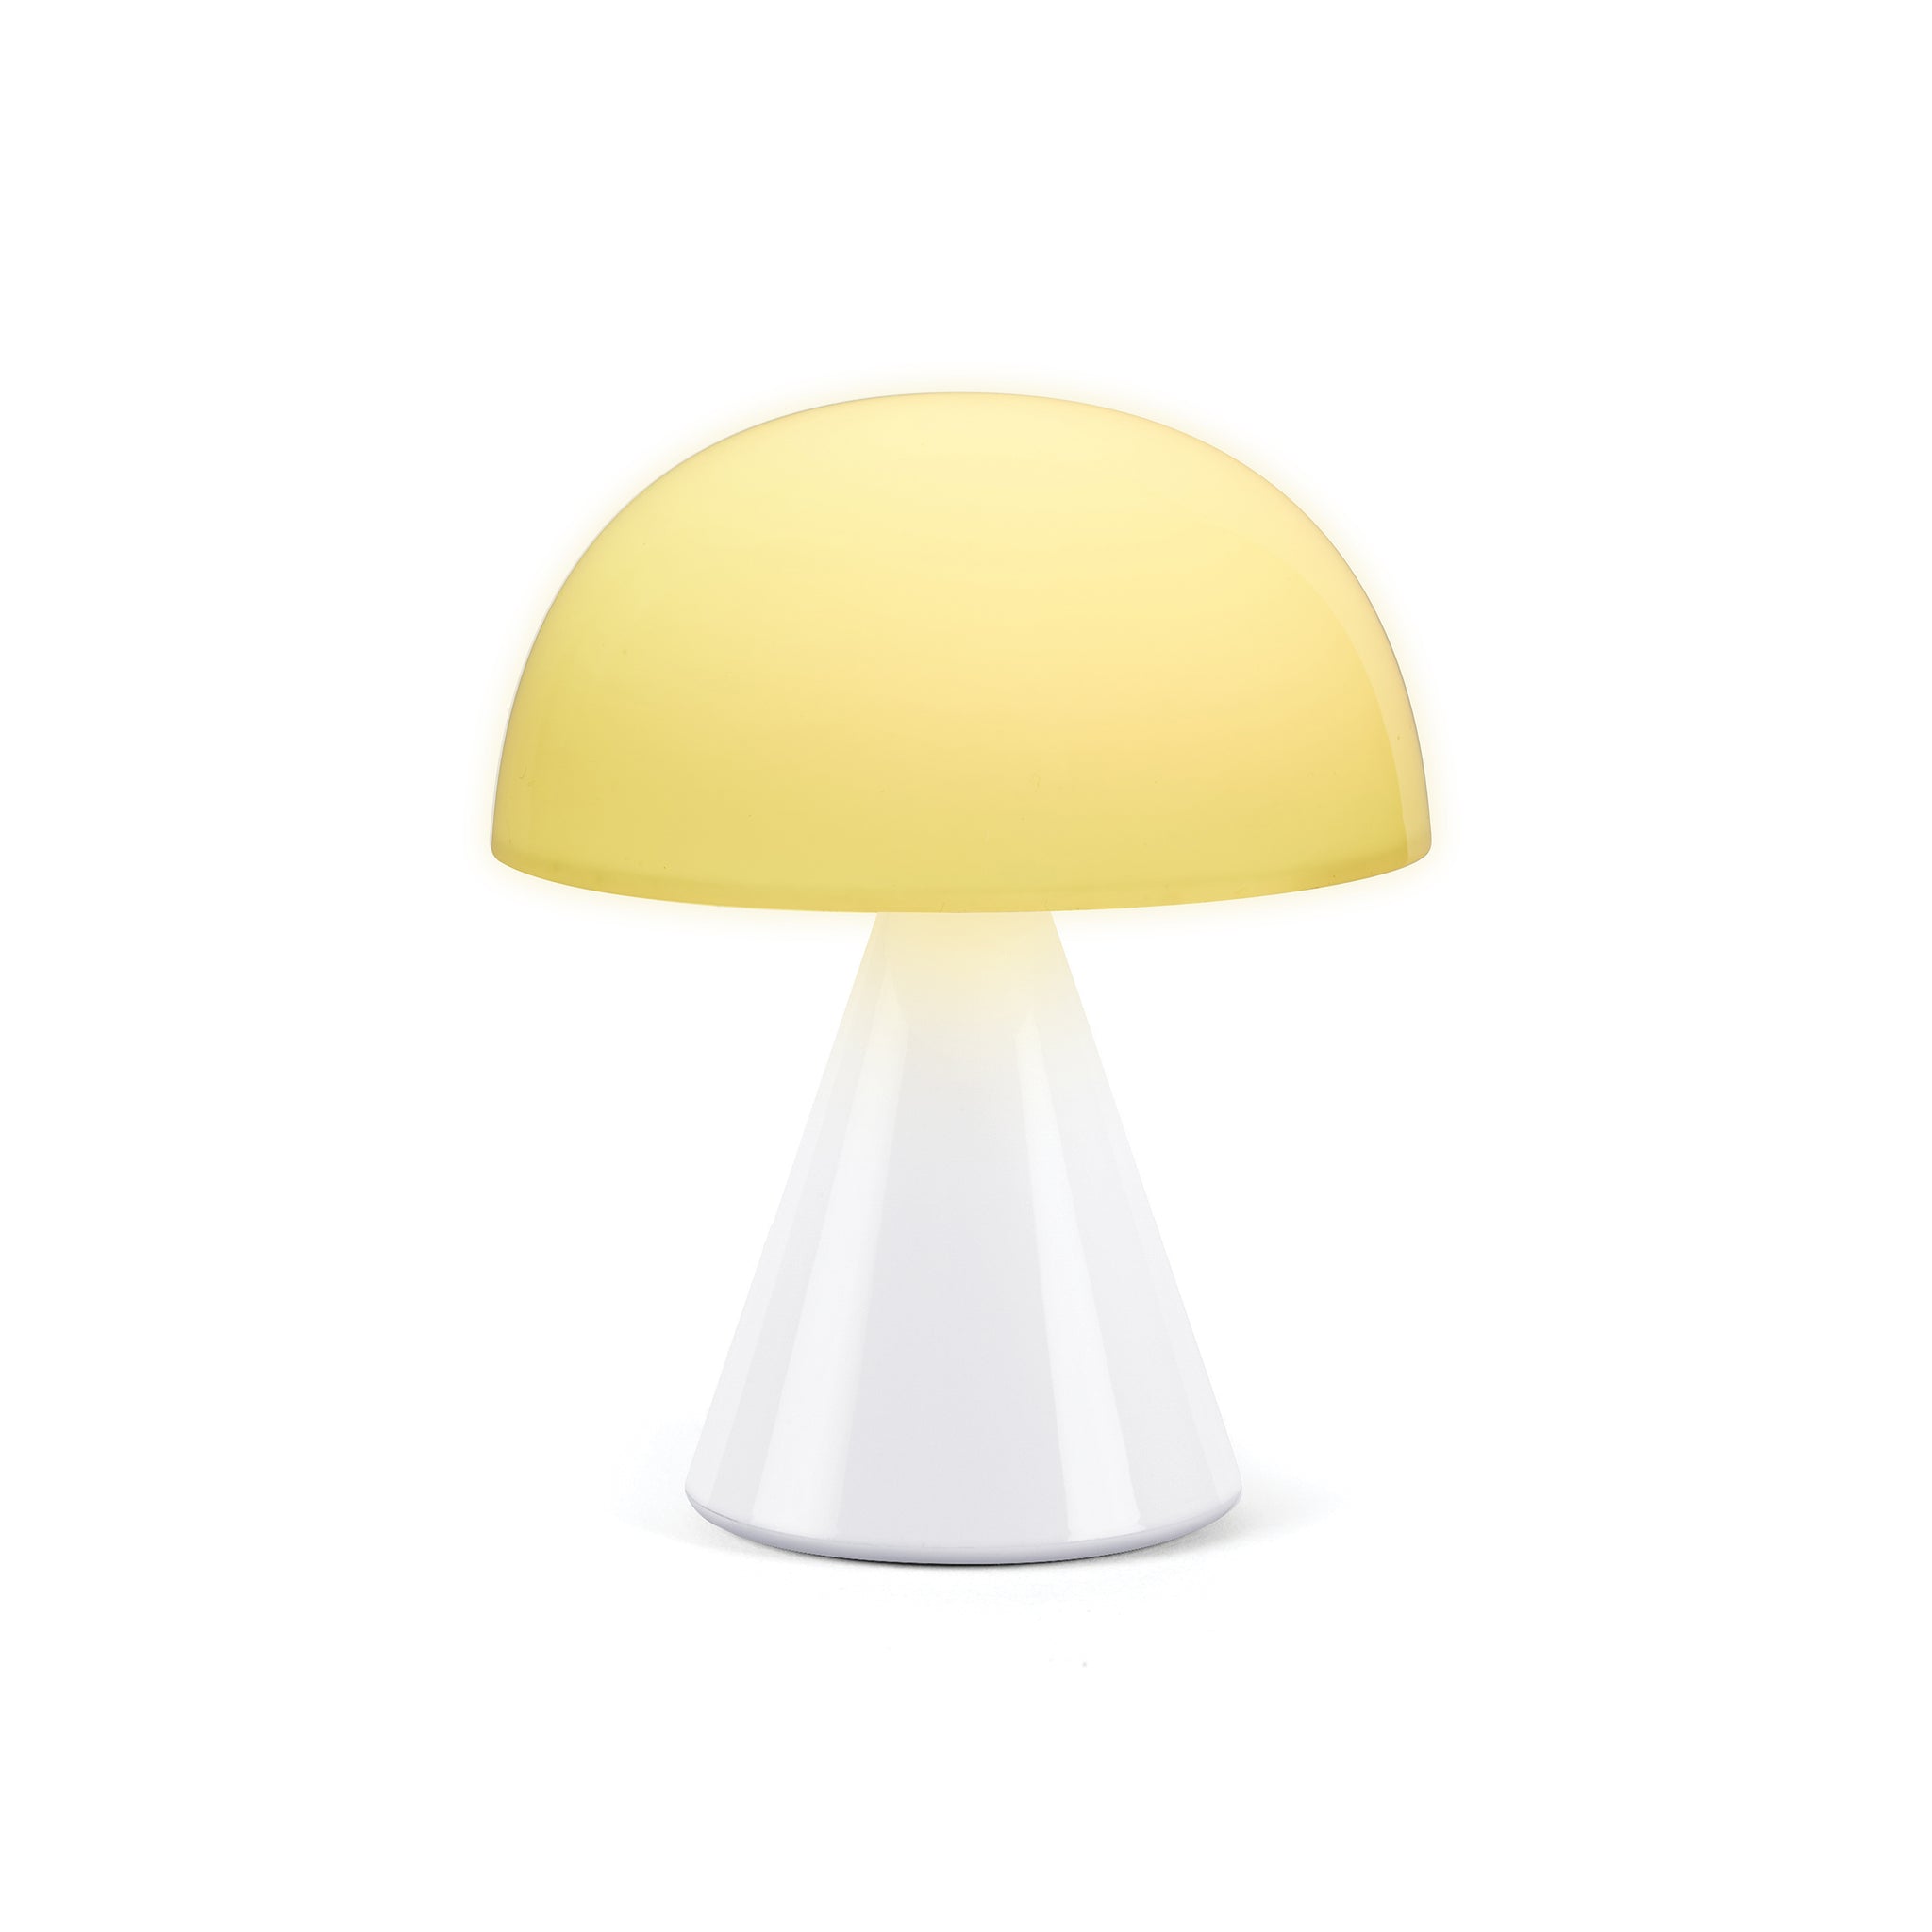 Lexon Mina Medium Glossy White│Oplaadbare LED-Lamp│art. LH64WG│vooraanzicht met geel licht aan